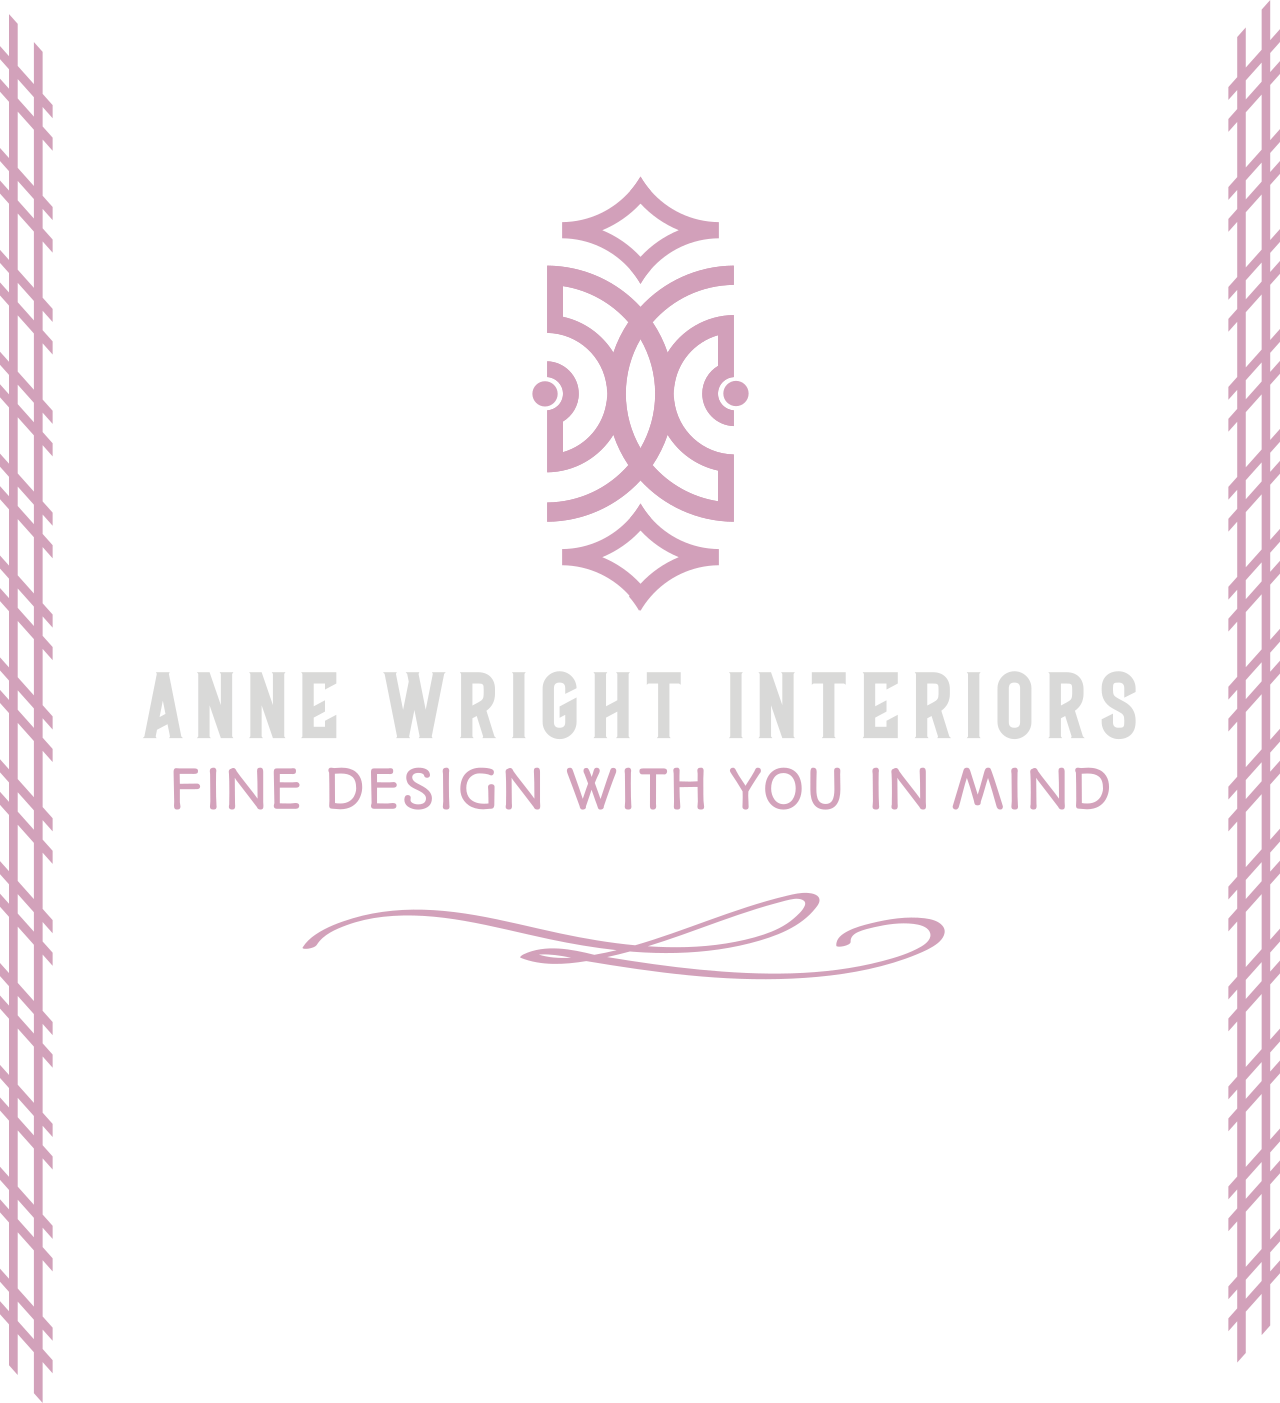 Anne Wright Interiors's logo